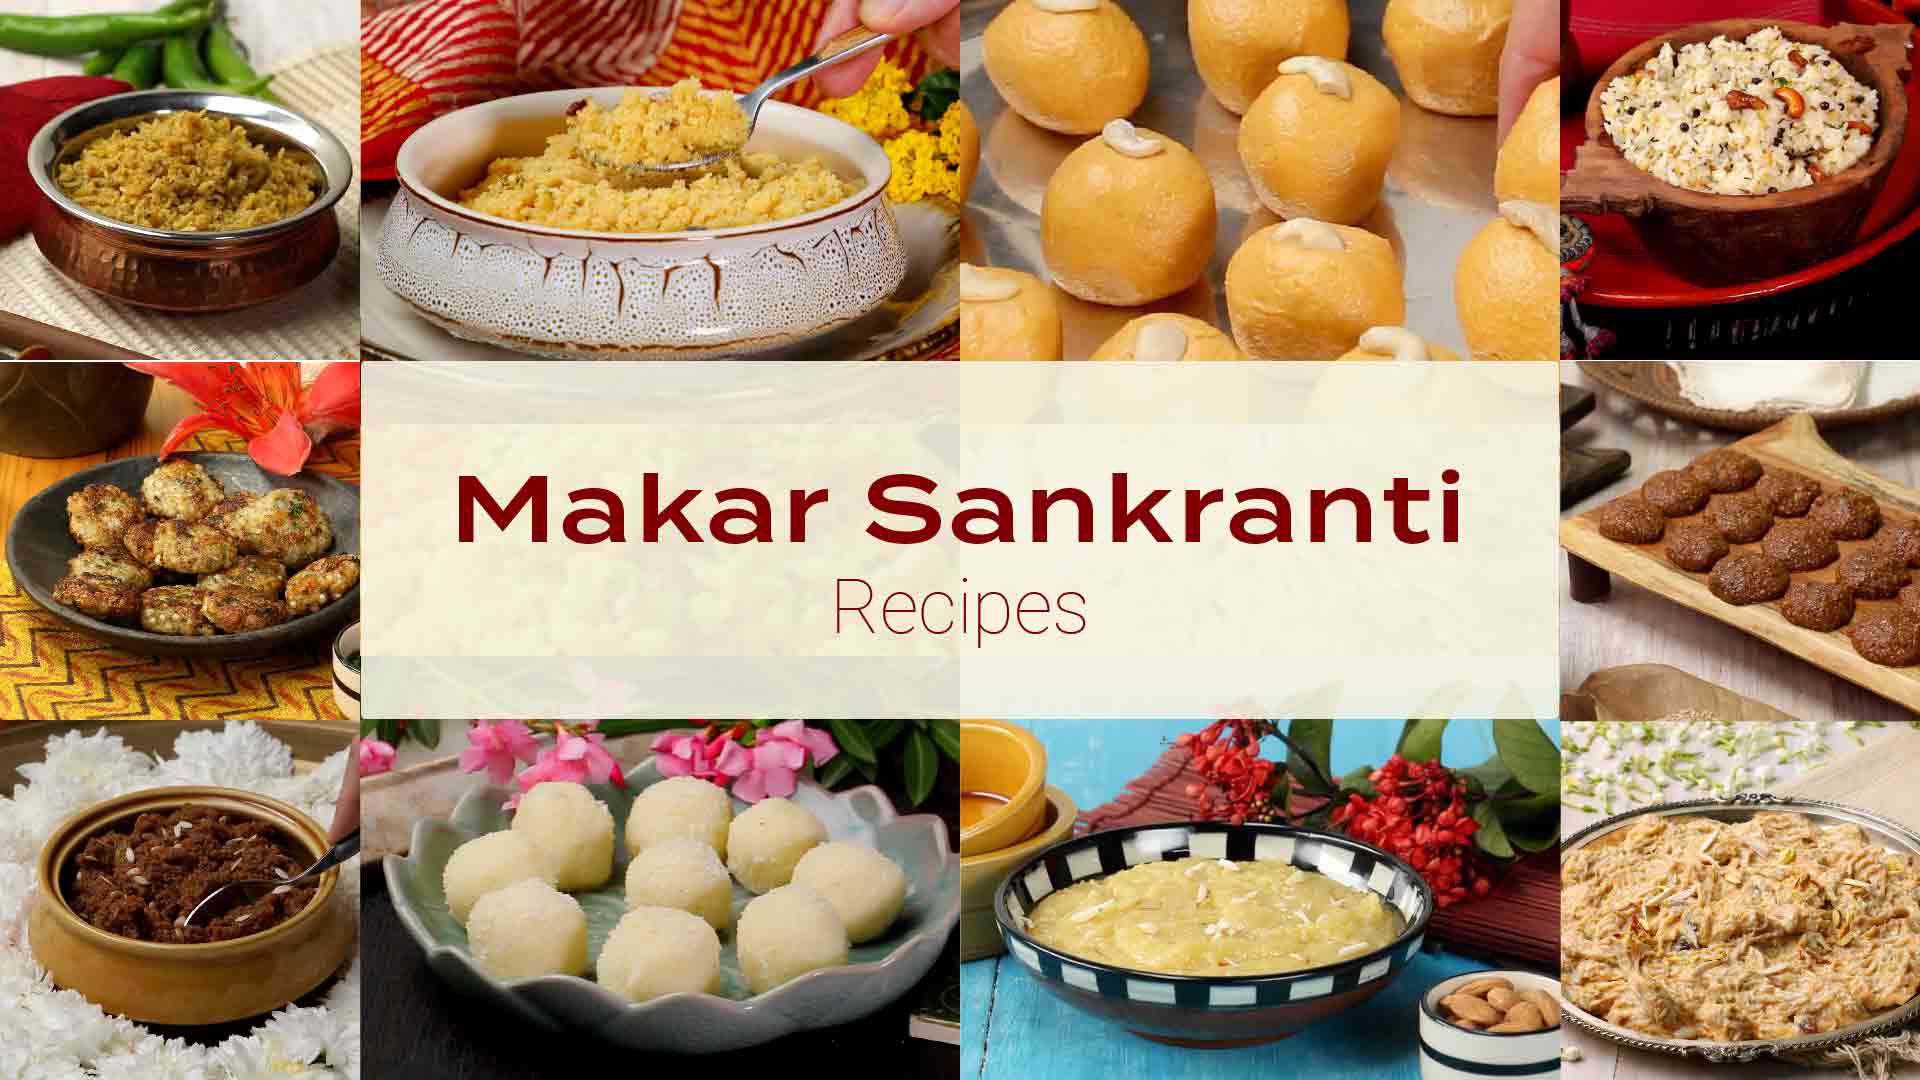 Cook up a Splendid Feast this Makar Sankranti with Yummefy's Sankranti recipes